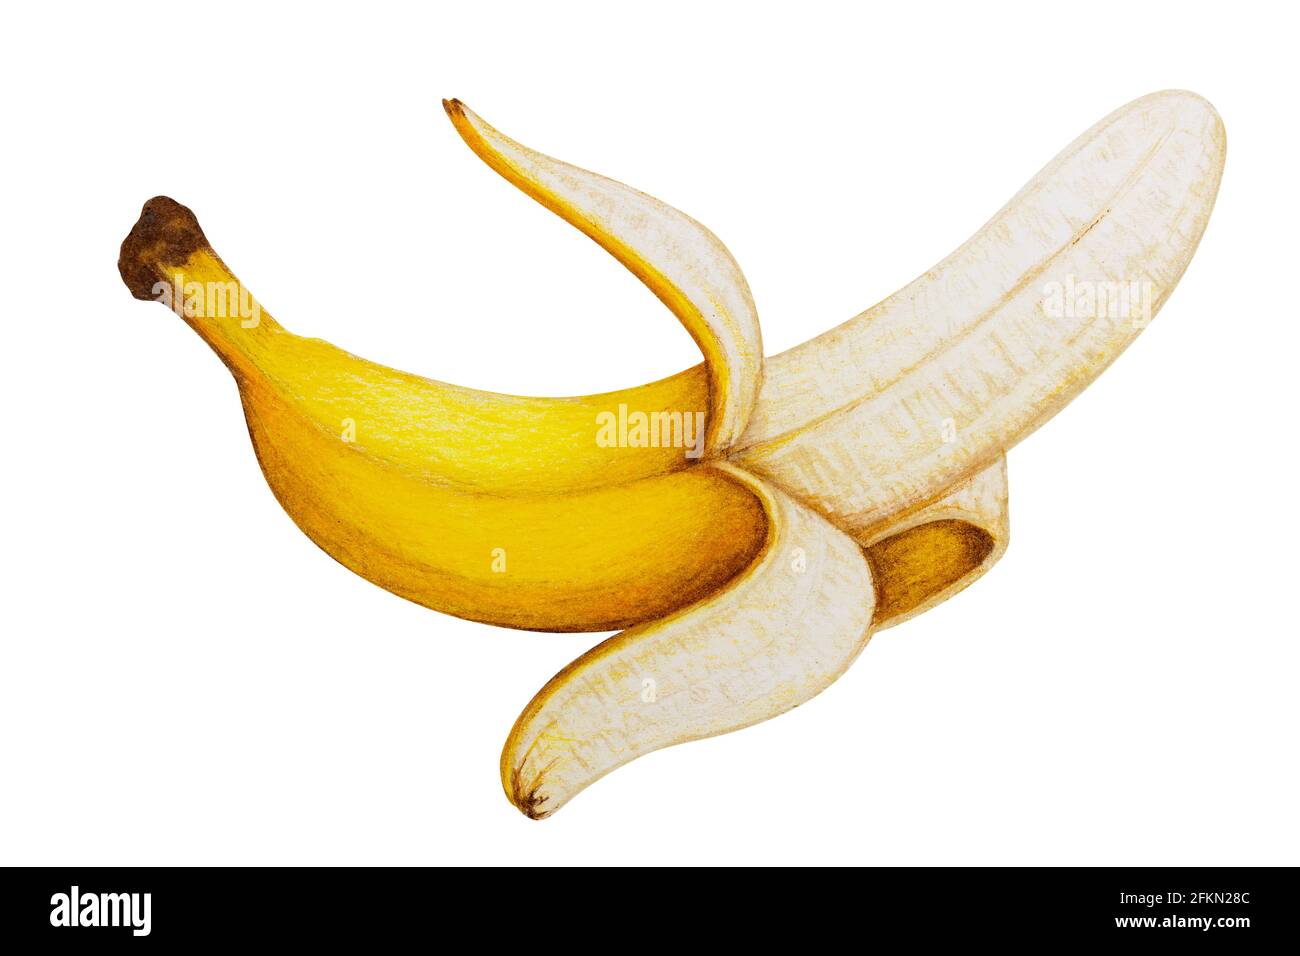 Banana Illustration Simple Colour Stock Illustration 2295250075 |  Shutterstock